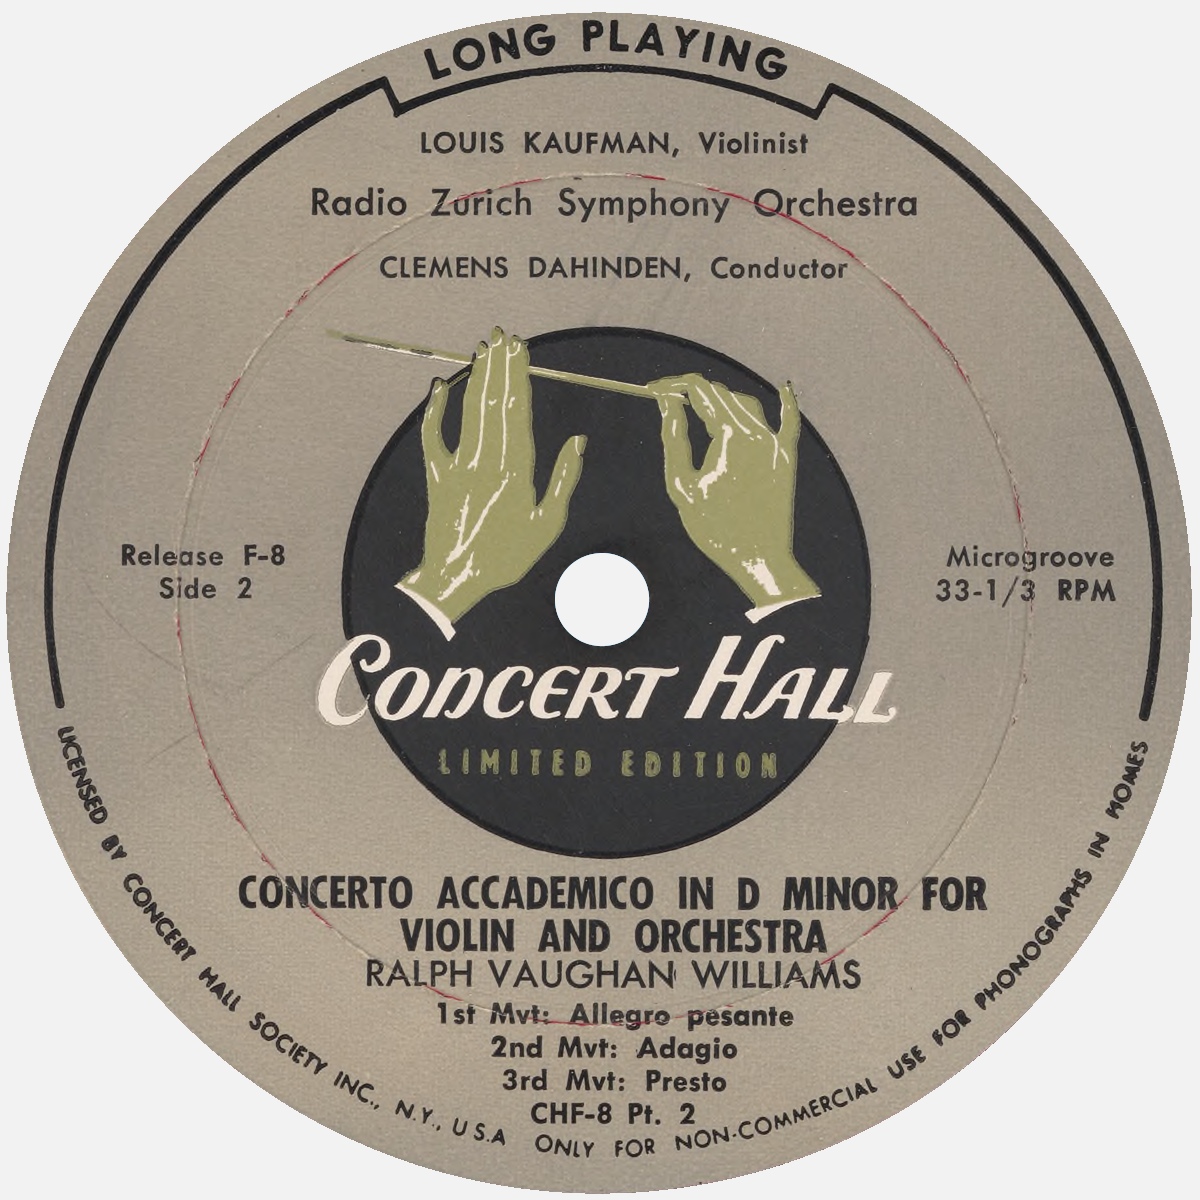 Étiquette verso du disque Concert Hall Society, Inc., Release F-8